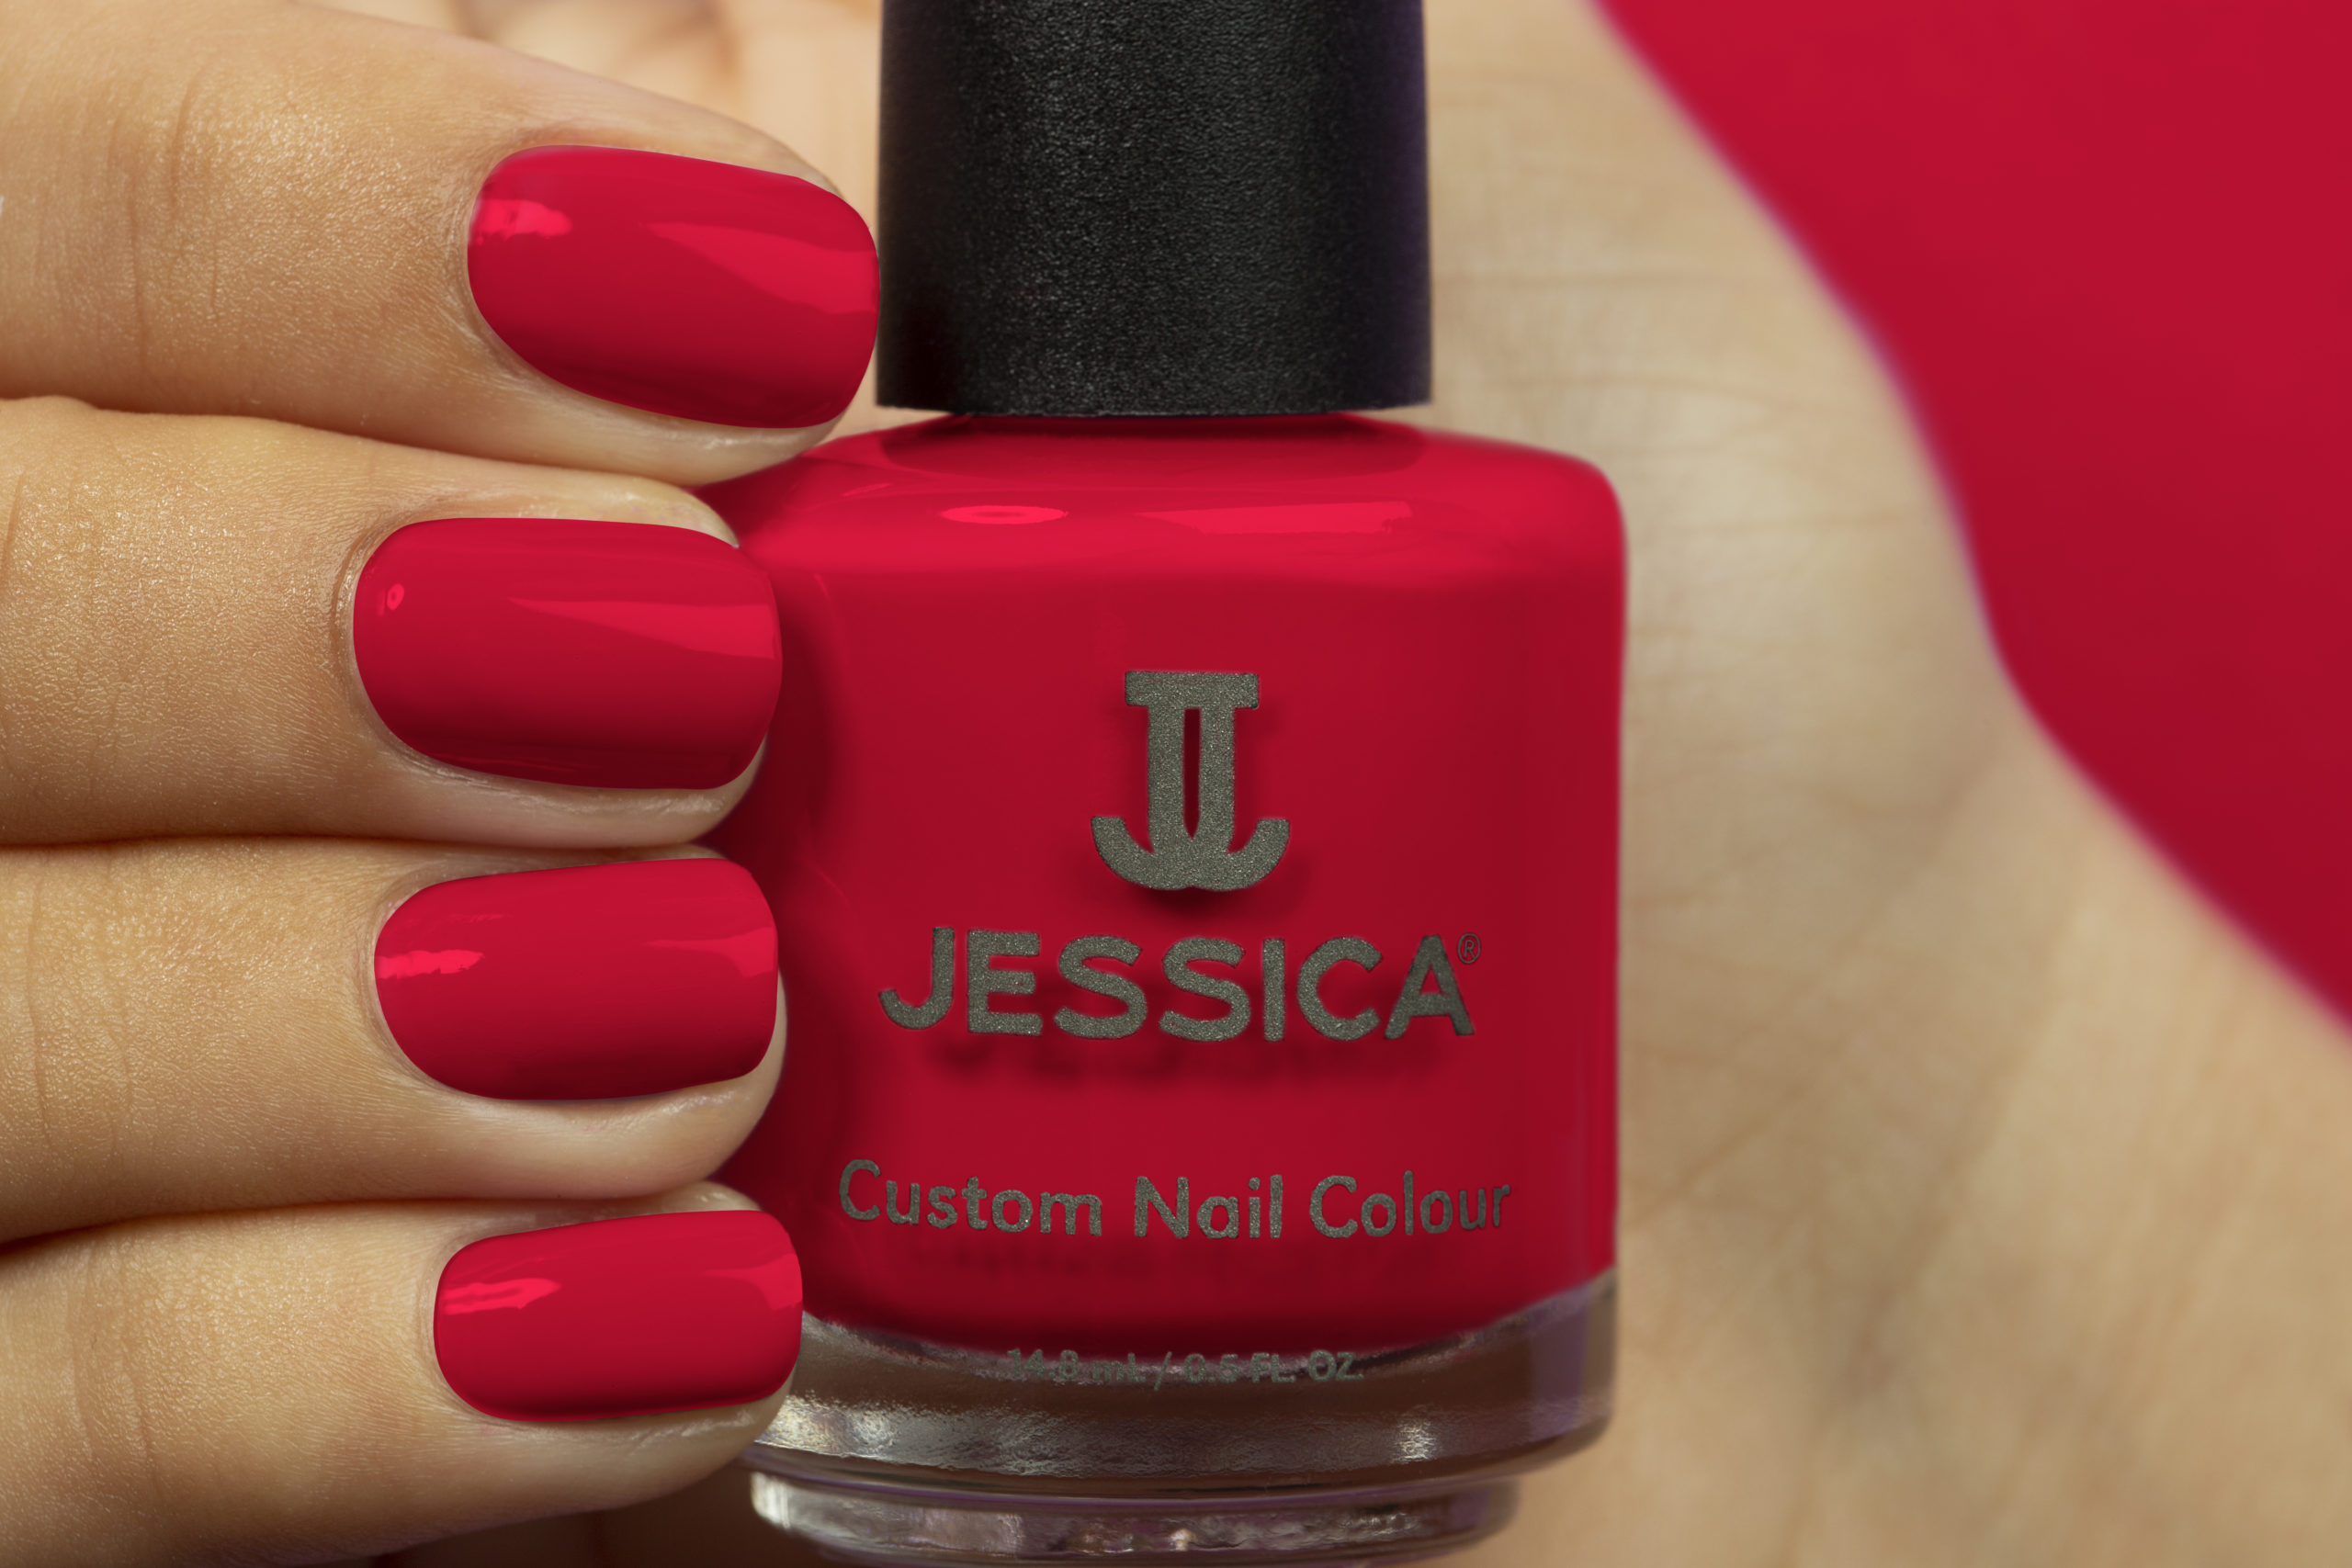 Jessica Custom Nail Colour - Flirty (14.8ml) - FREE Delivery